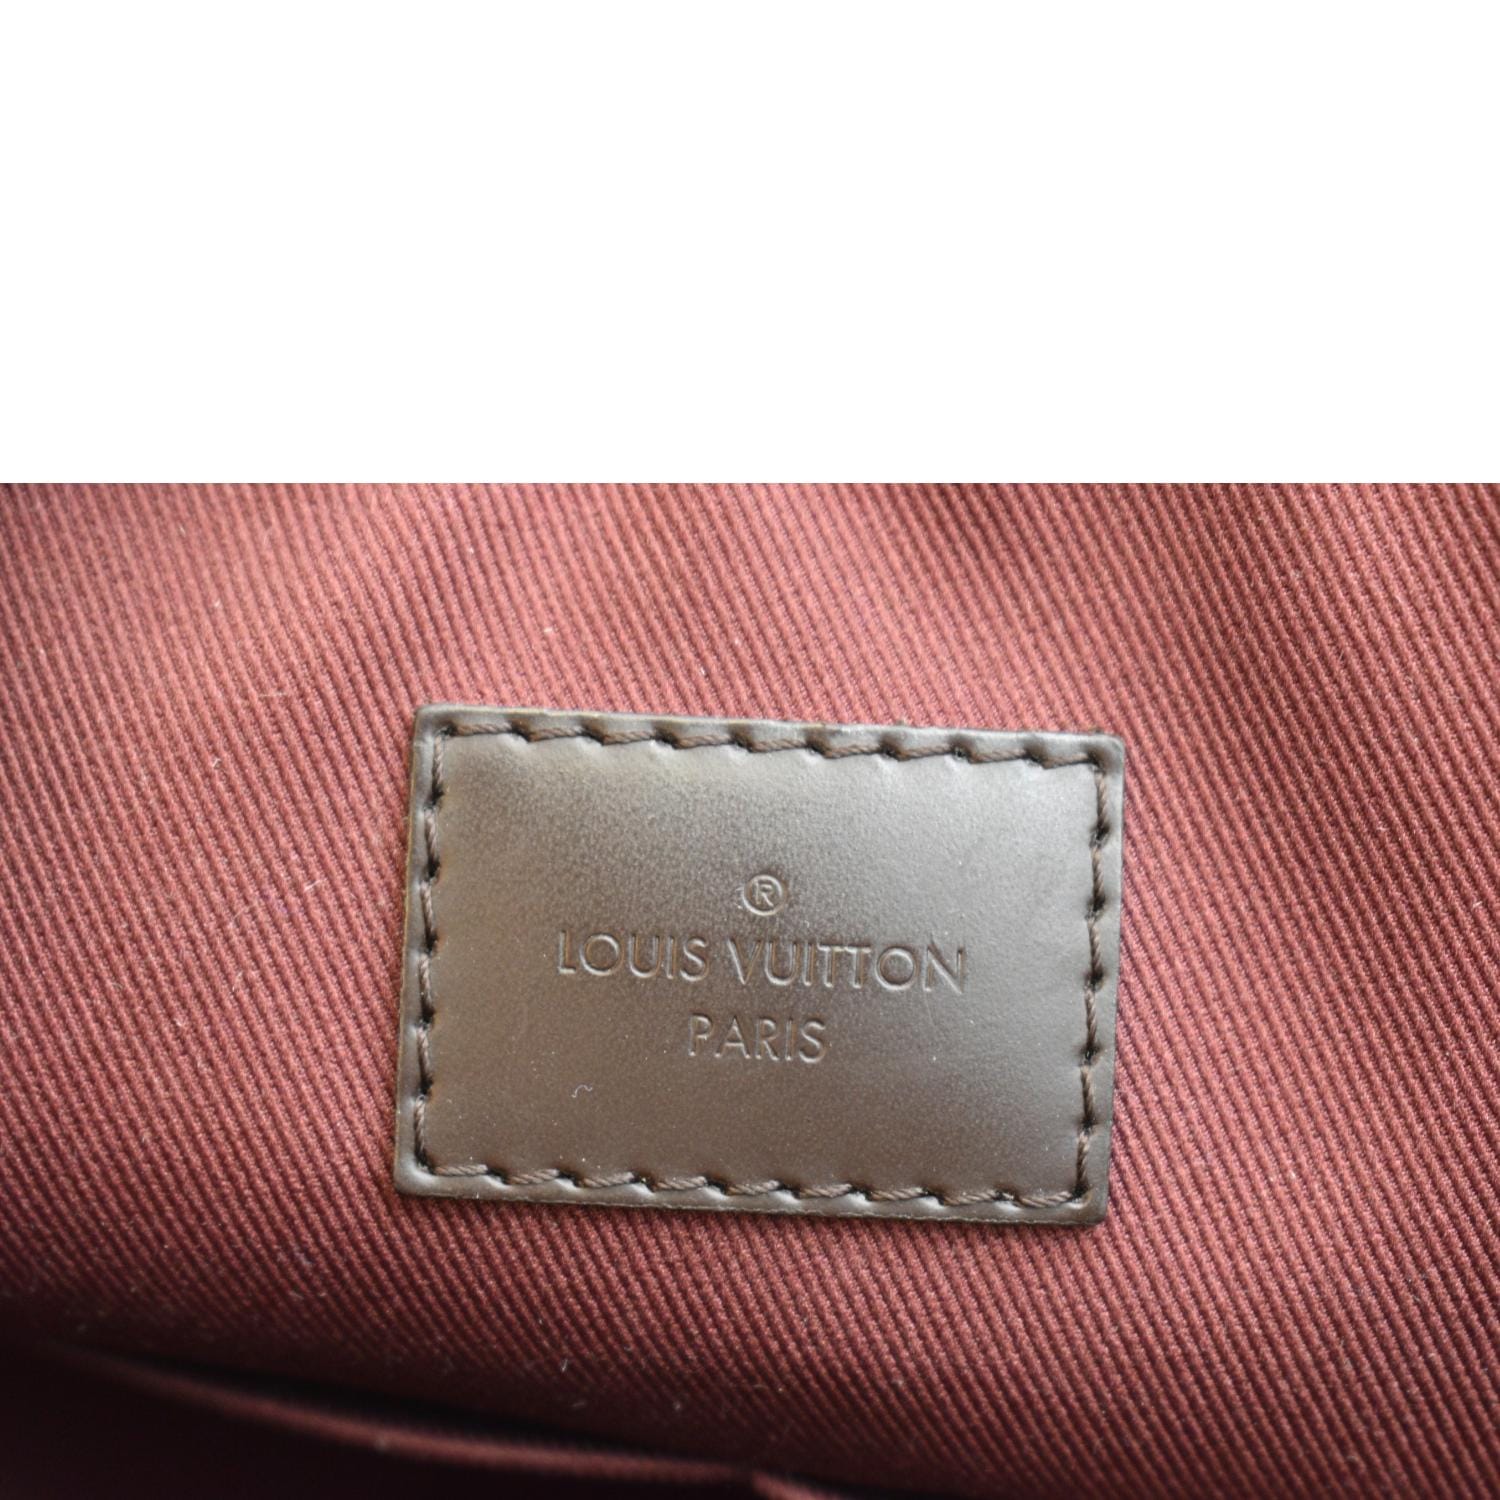 New Lymington purse from LV ❤️ gorgeous bag! #louisvuitton